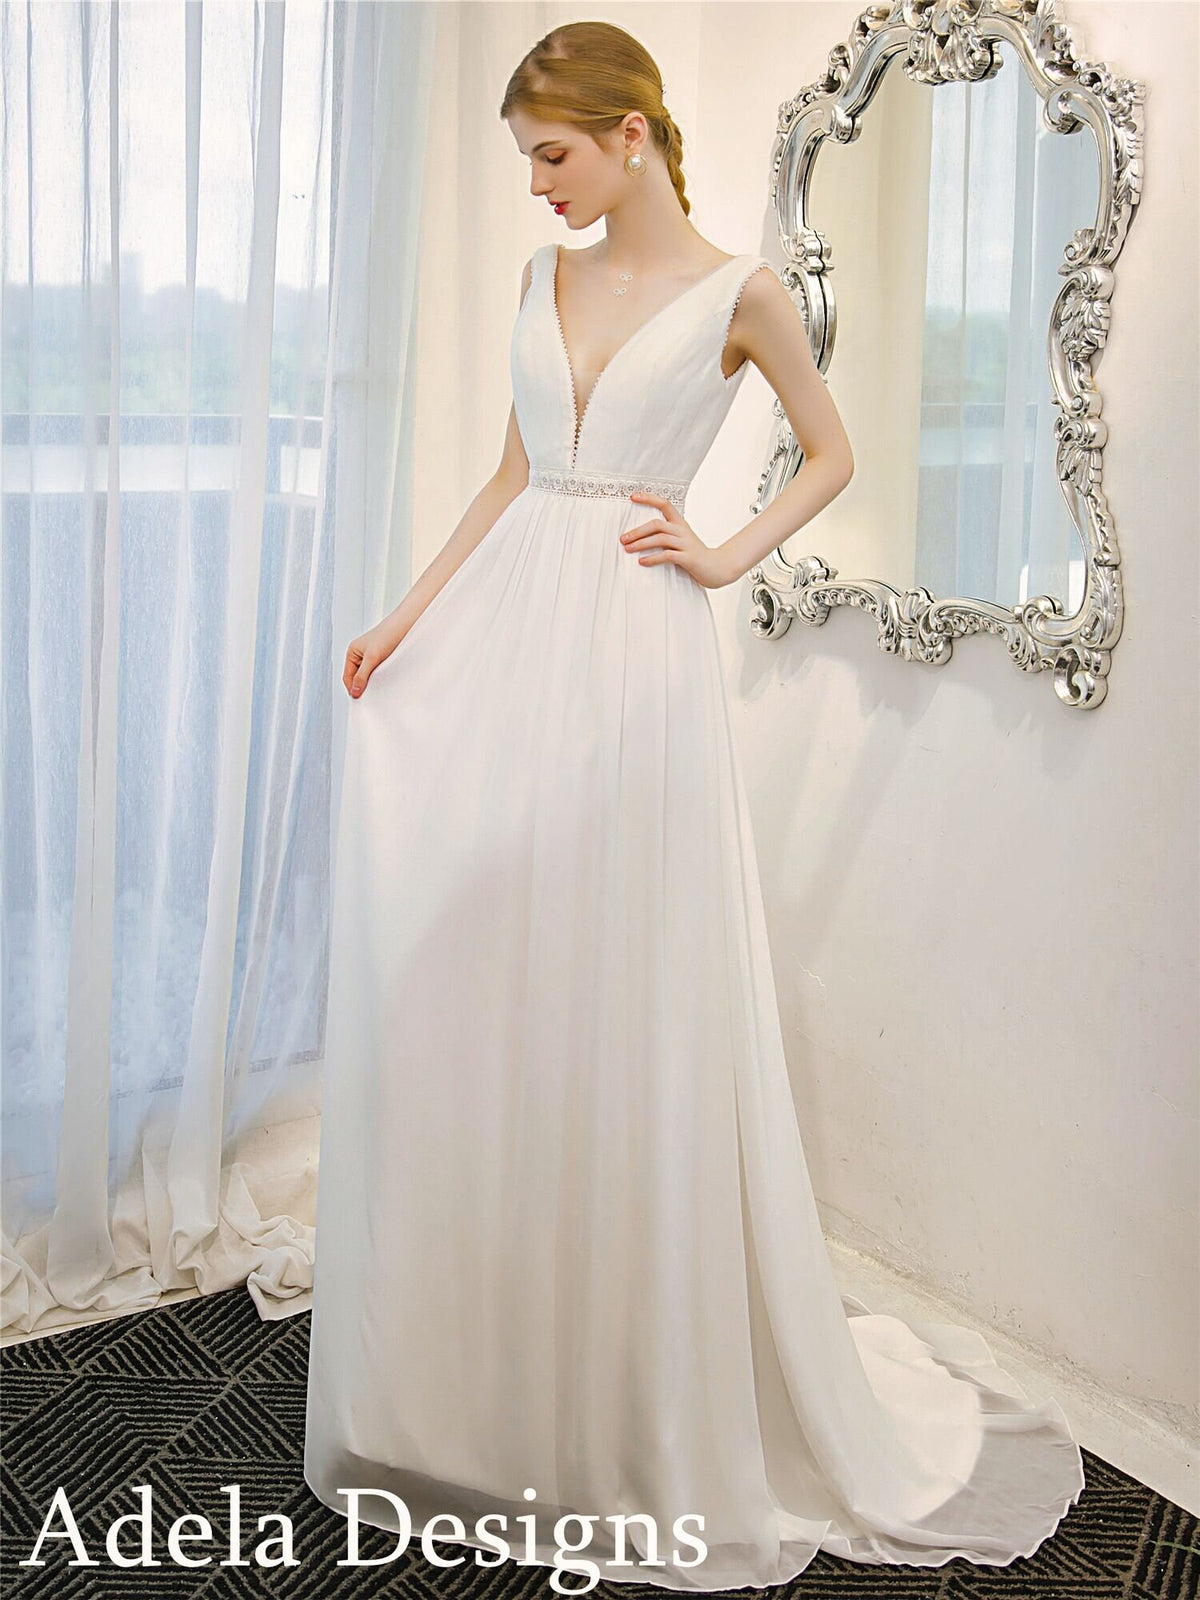 A-Line Simple Boho Chiffon Sleeveless Deep V Neckline Open Back Goddess Style Wedding Dress Bridal Gown